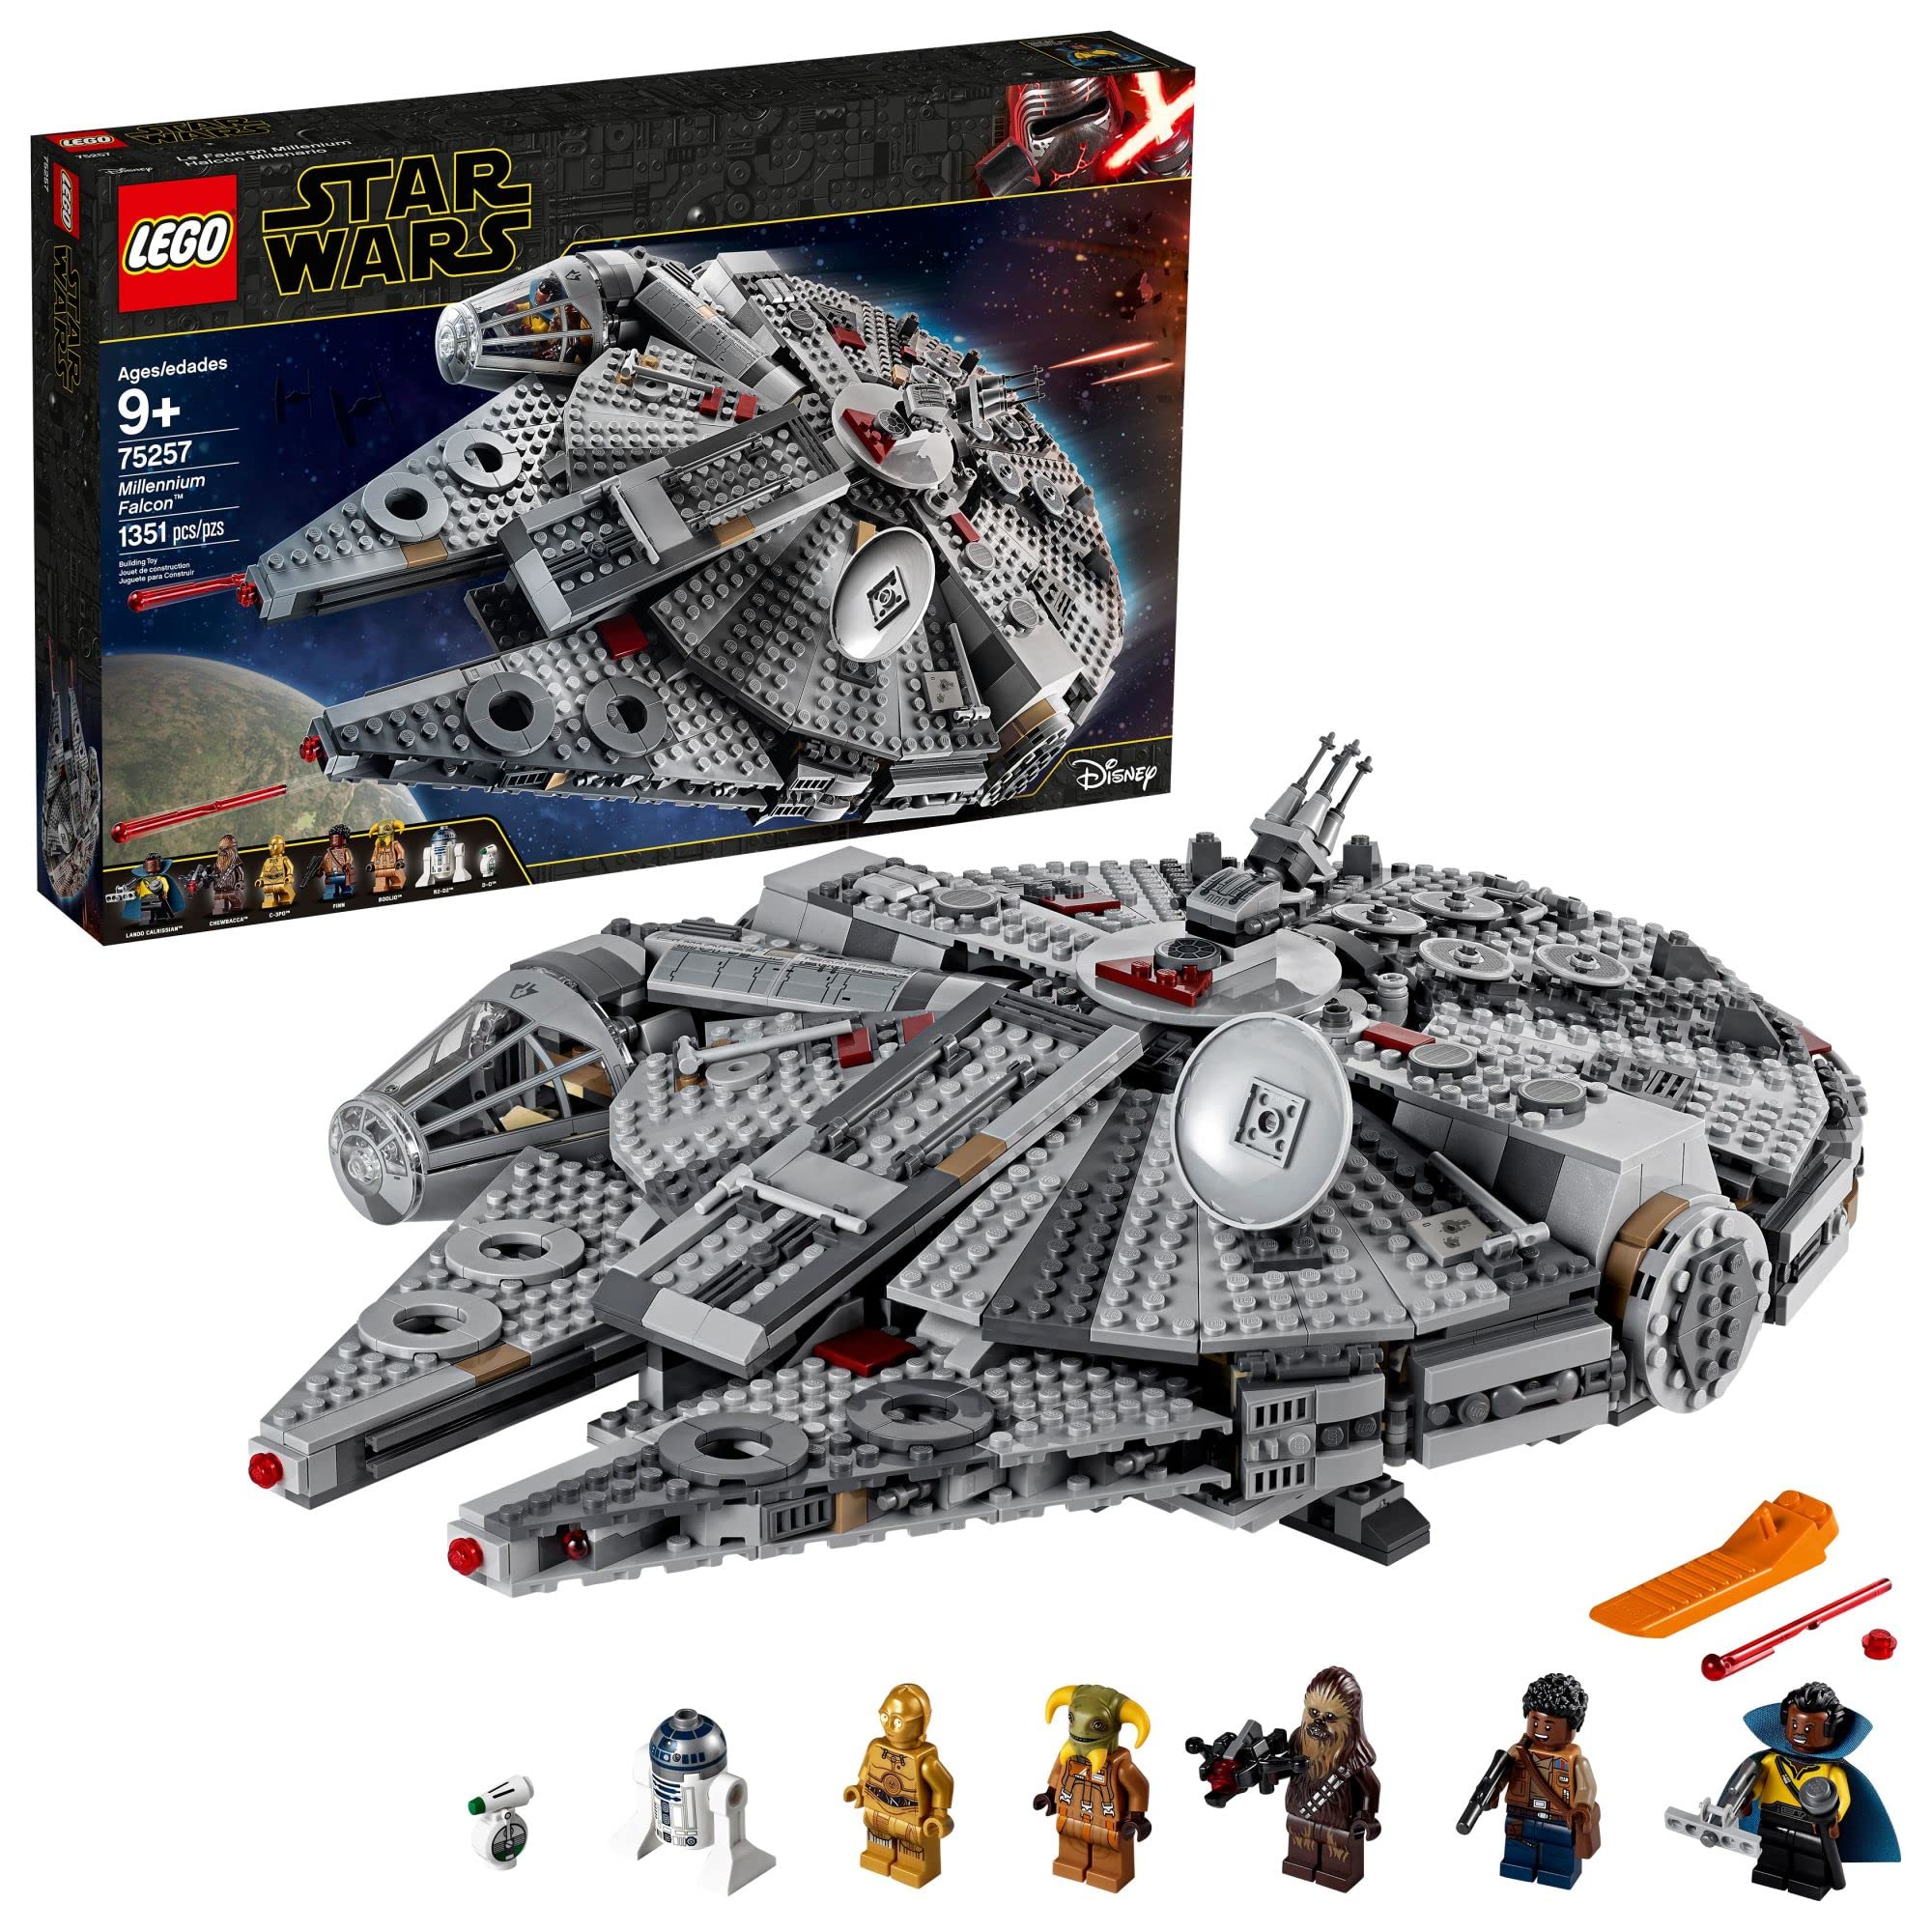 $135.99: LEGO Star Wars Millennium Falcon 75257 Building Set